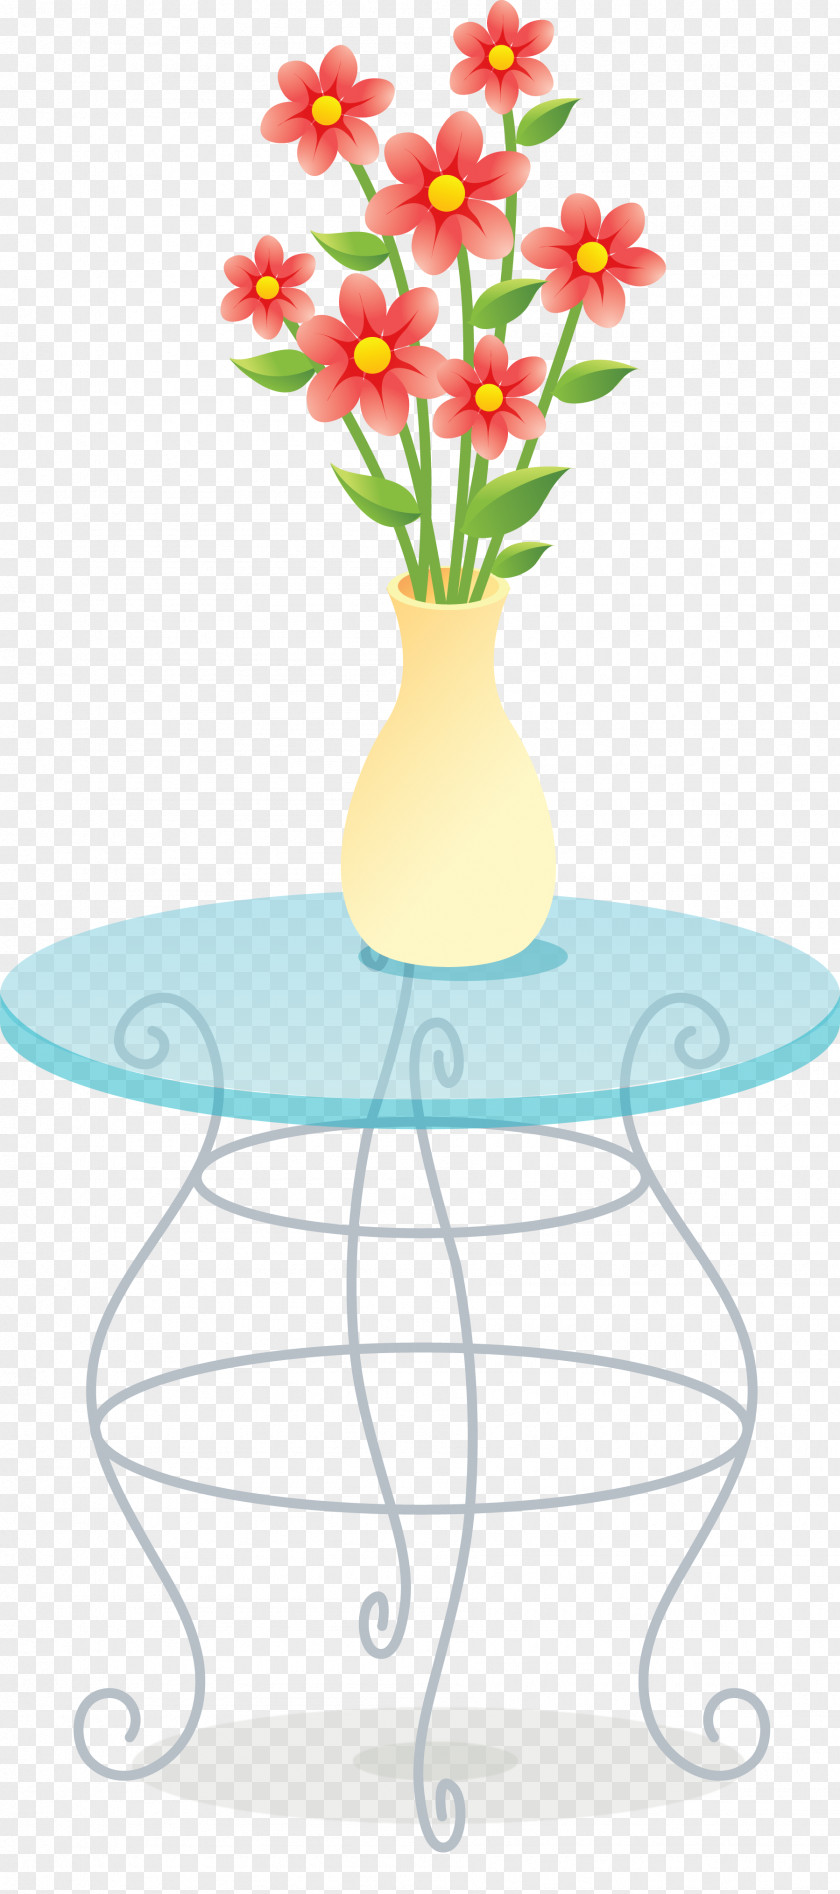 Flower Silhouette Vase Clip Art Image PNG